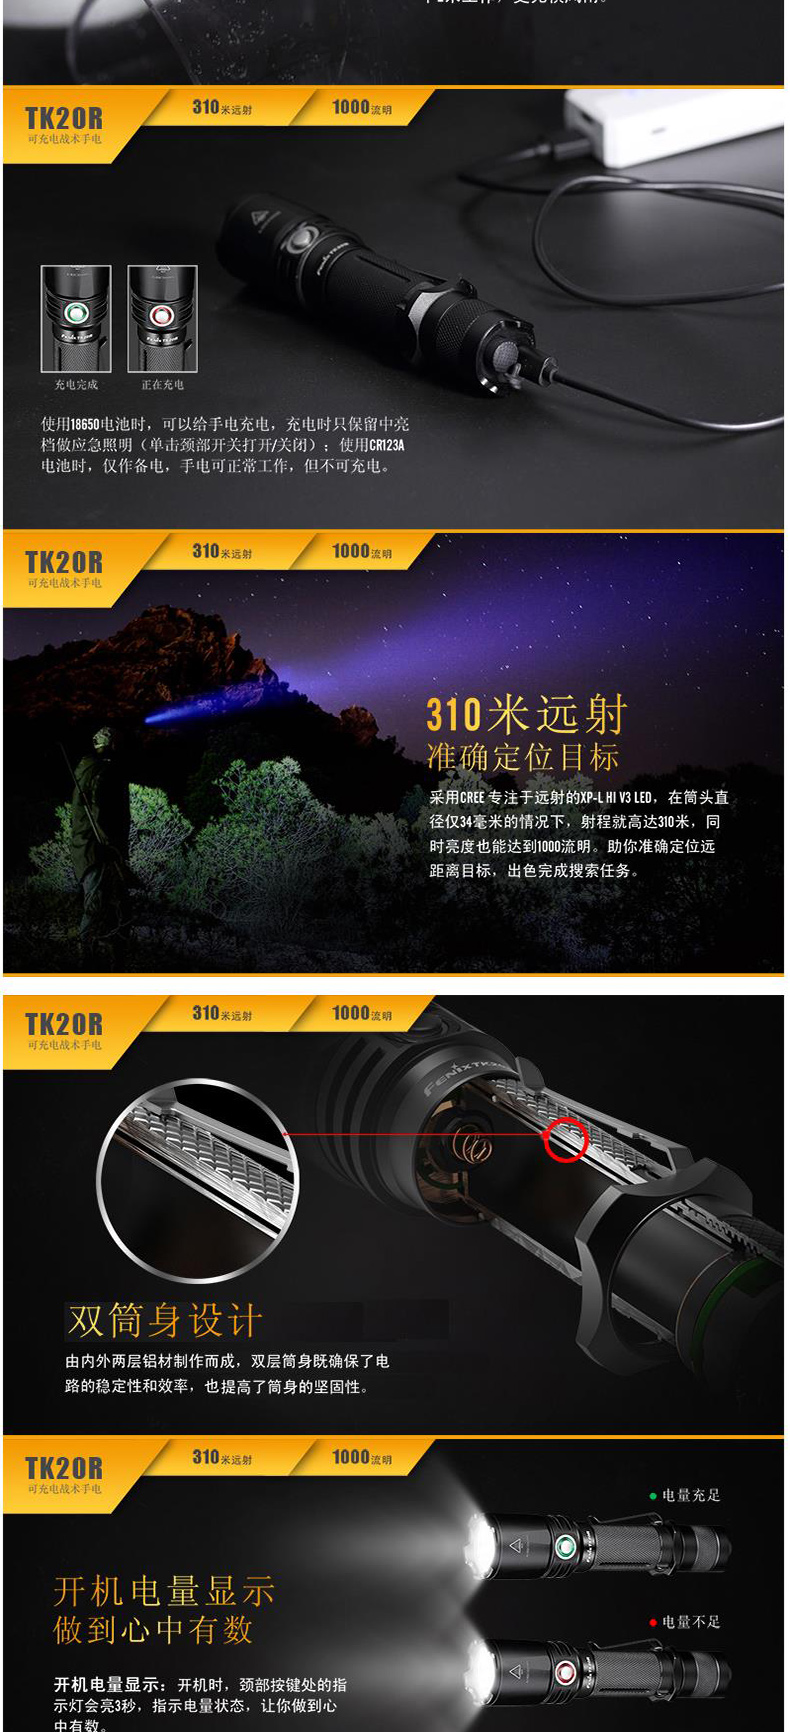 Fenix菲尼克斯 USB充电远射战术防水防尘手电筒 TK20R 1000流明 (黑色)